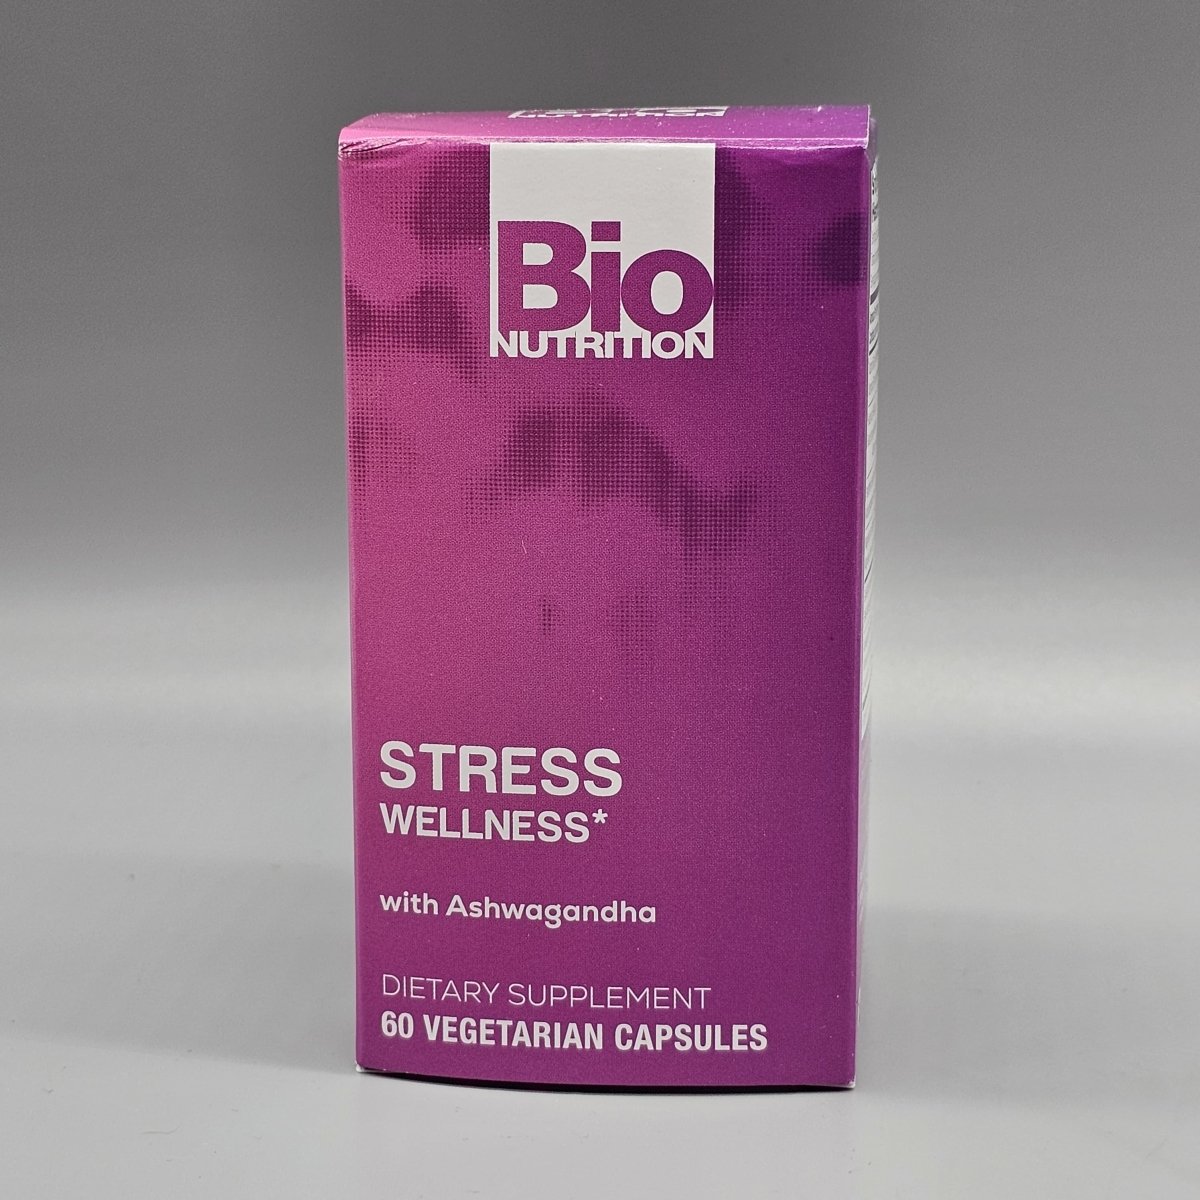 Stress Wellness with Ashwaganda - 445mg - 60 Vegetarian Capsules